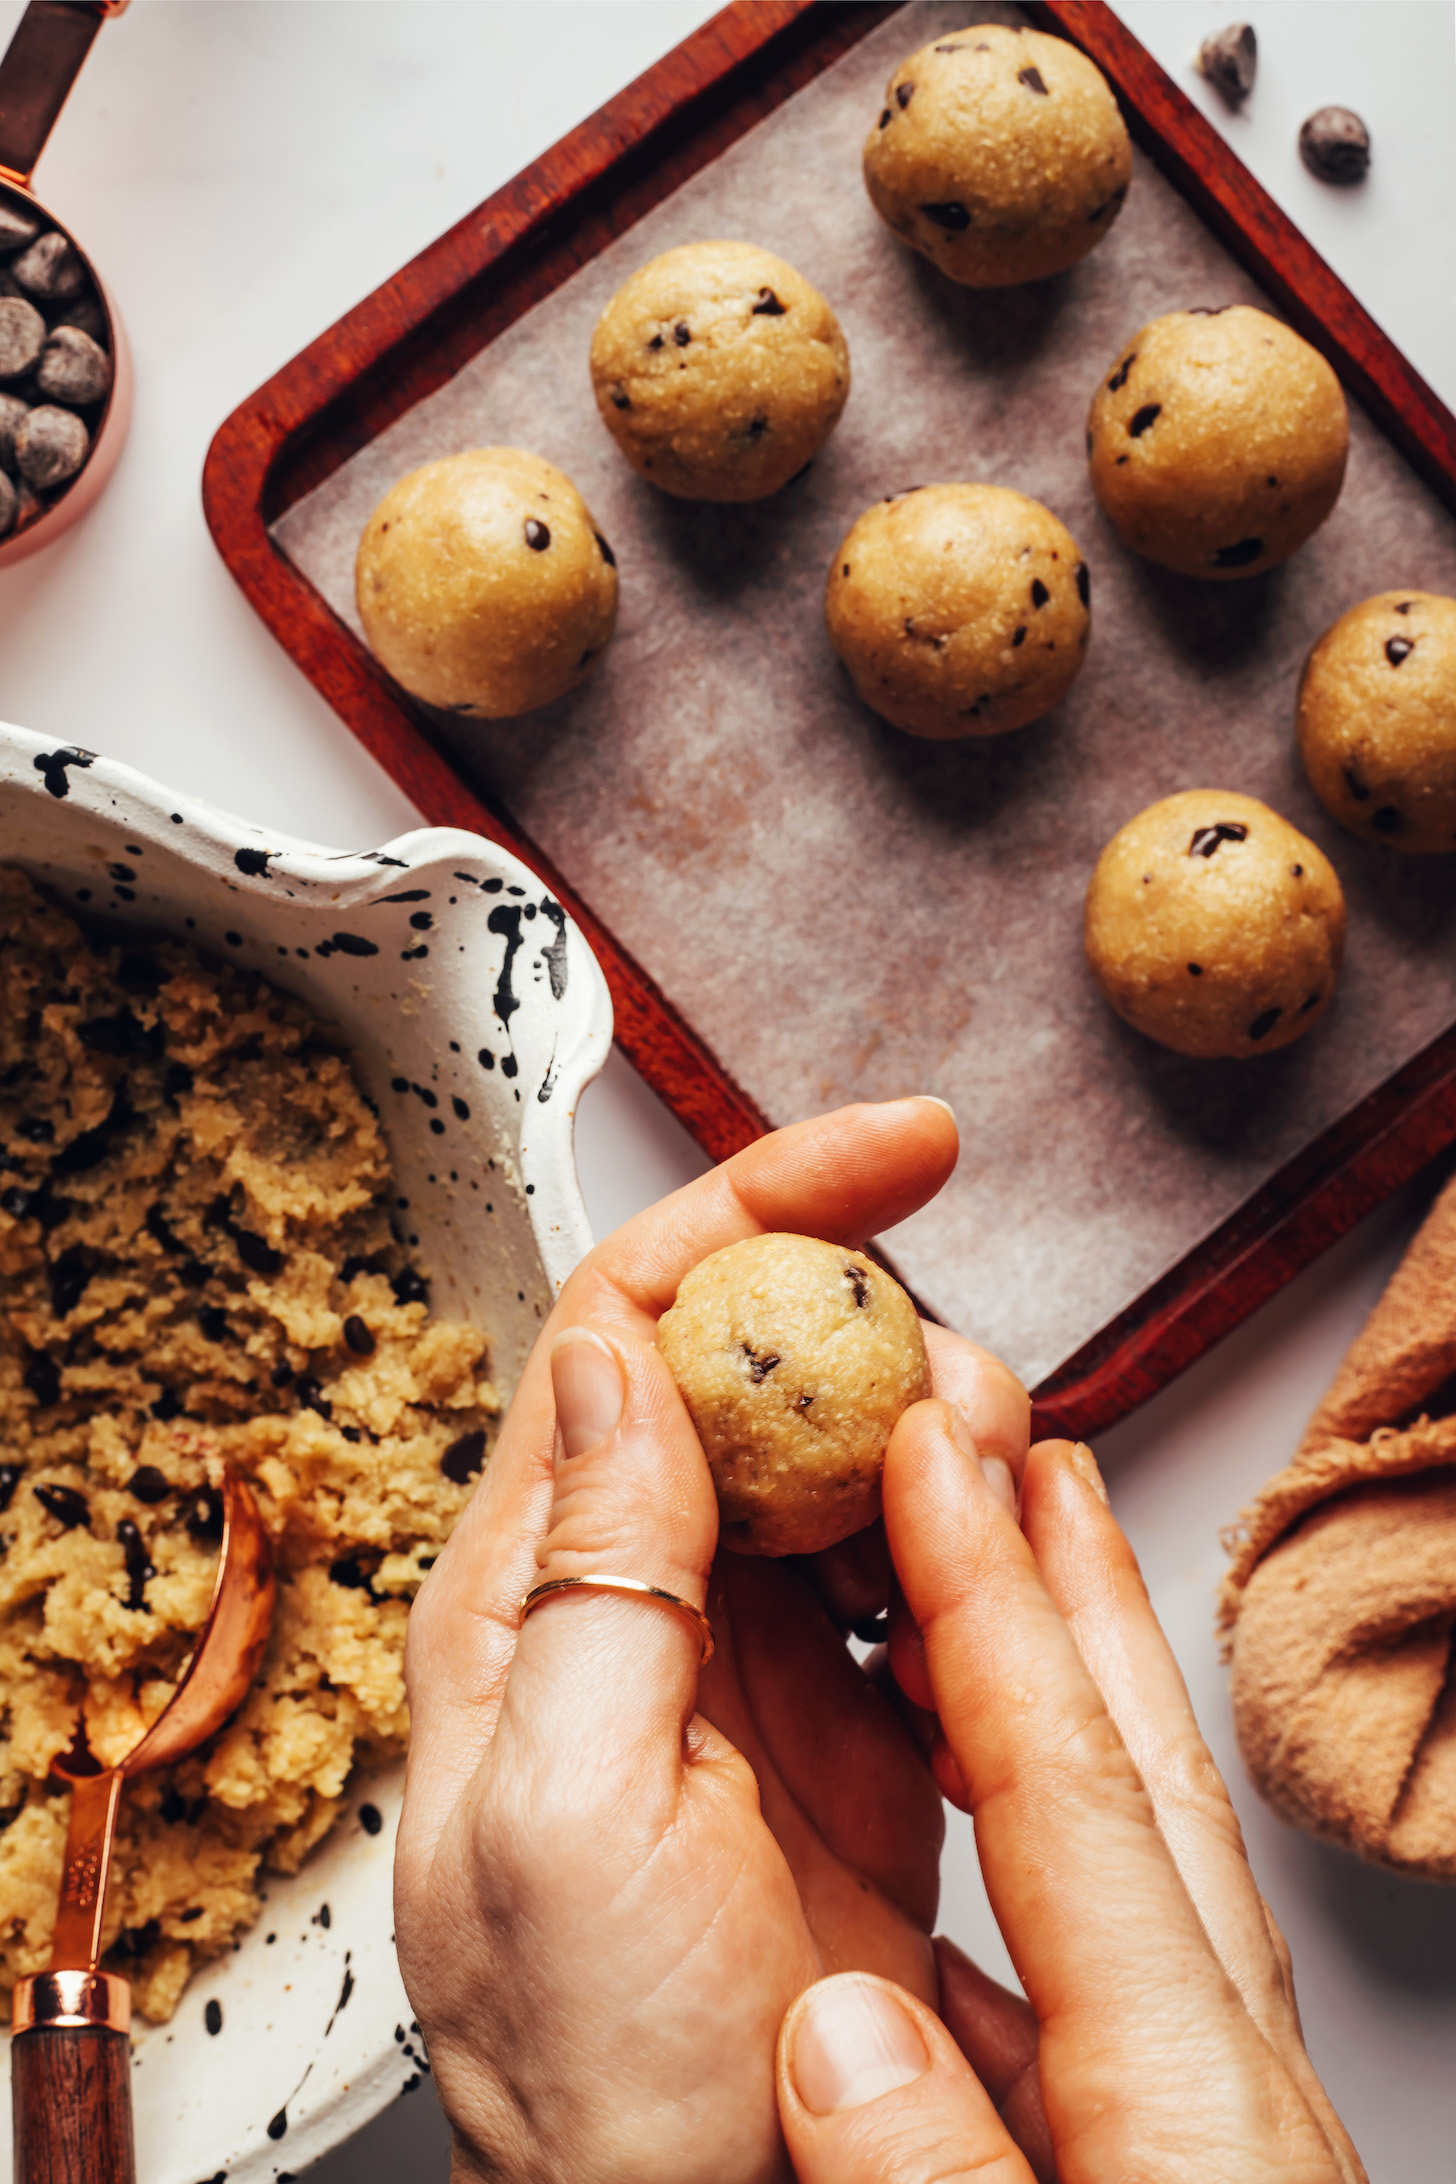 Rolling a no-bake cookie dough ball between hands